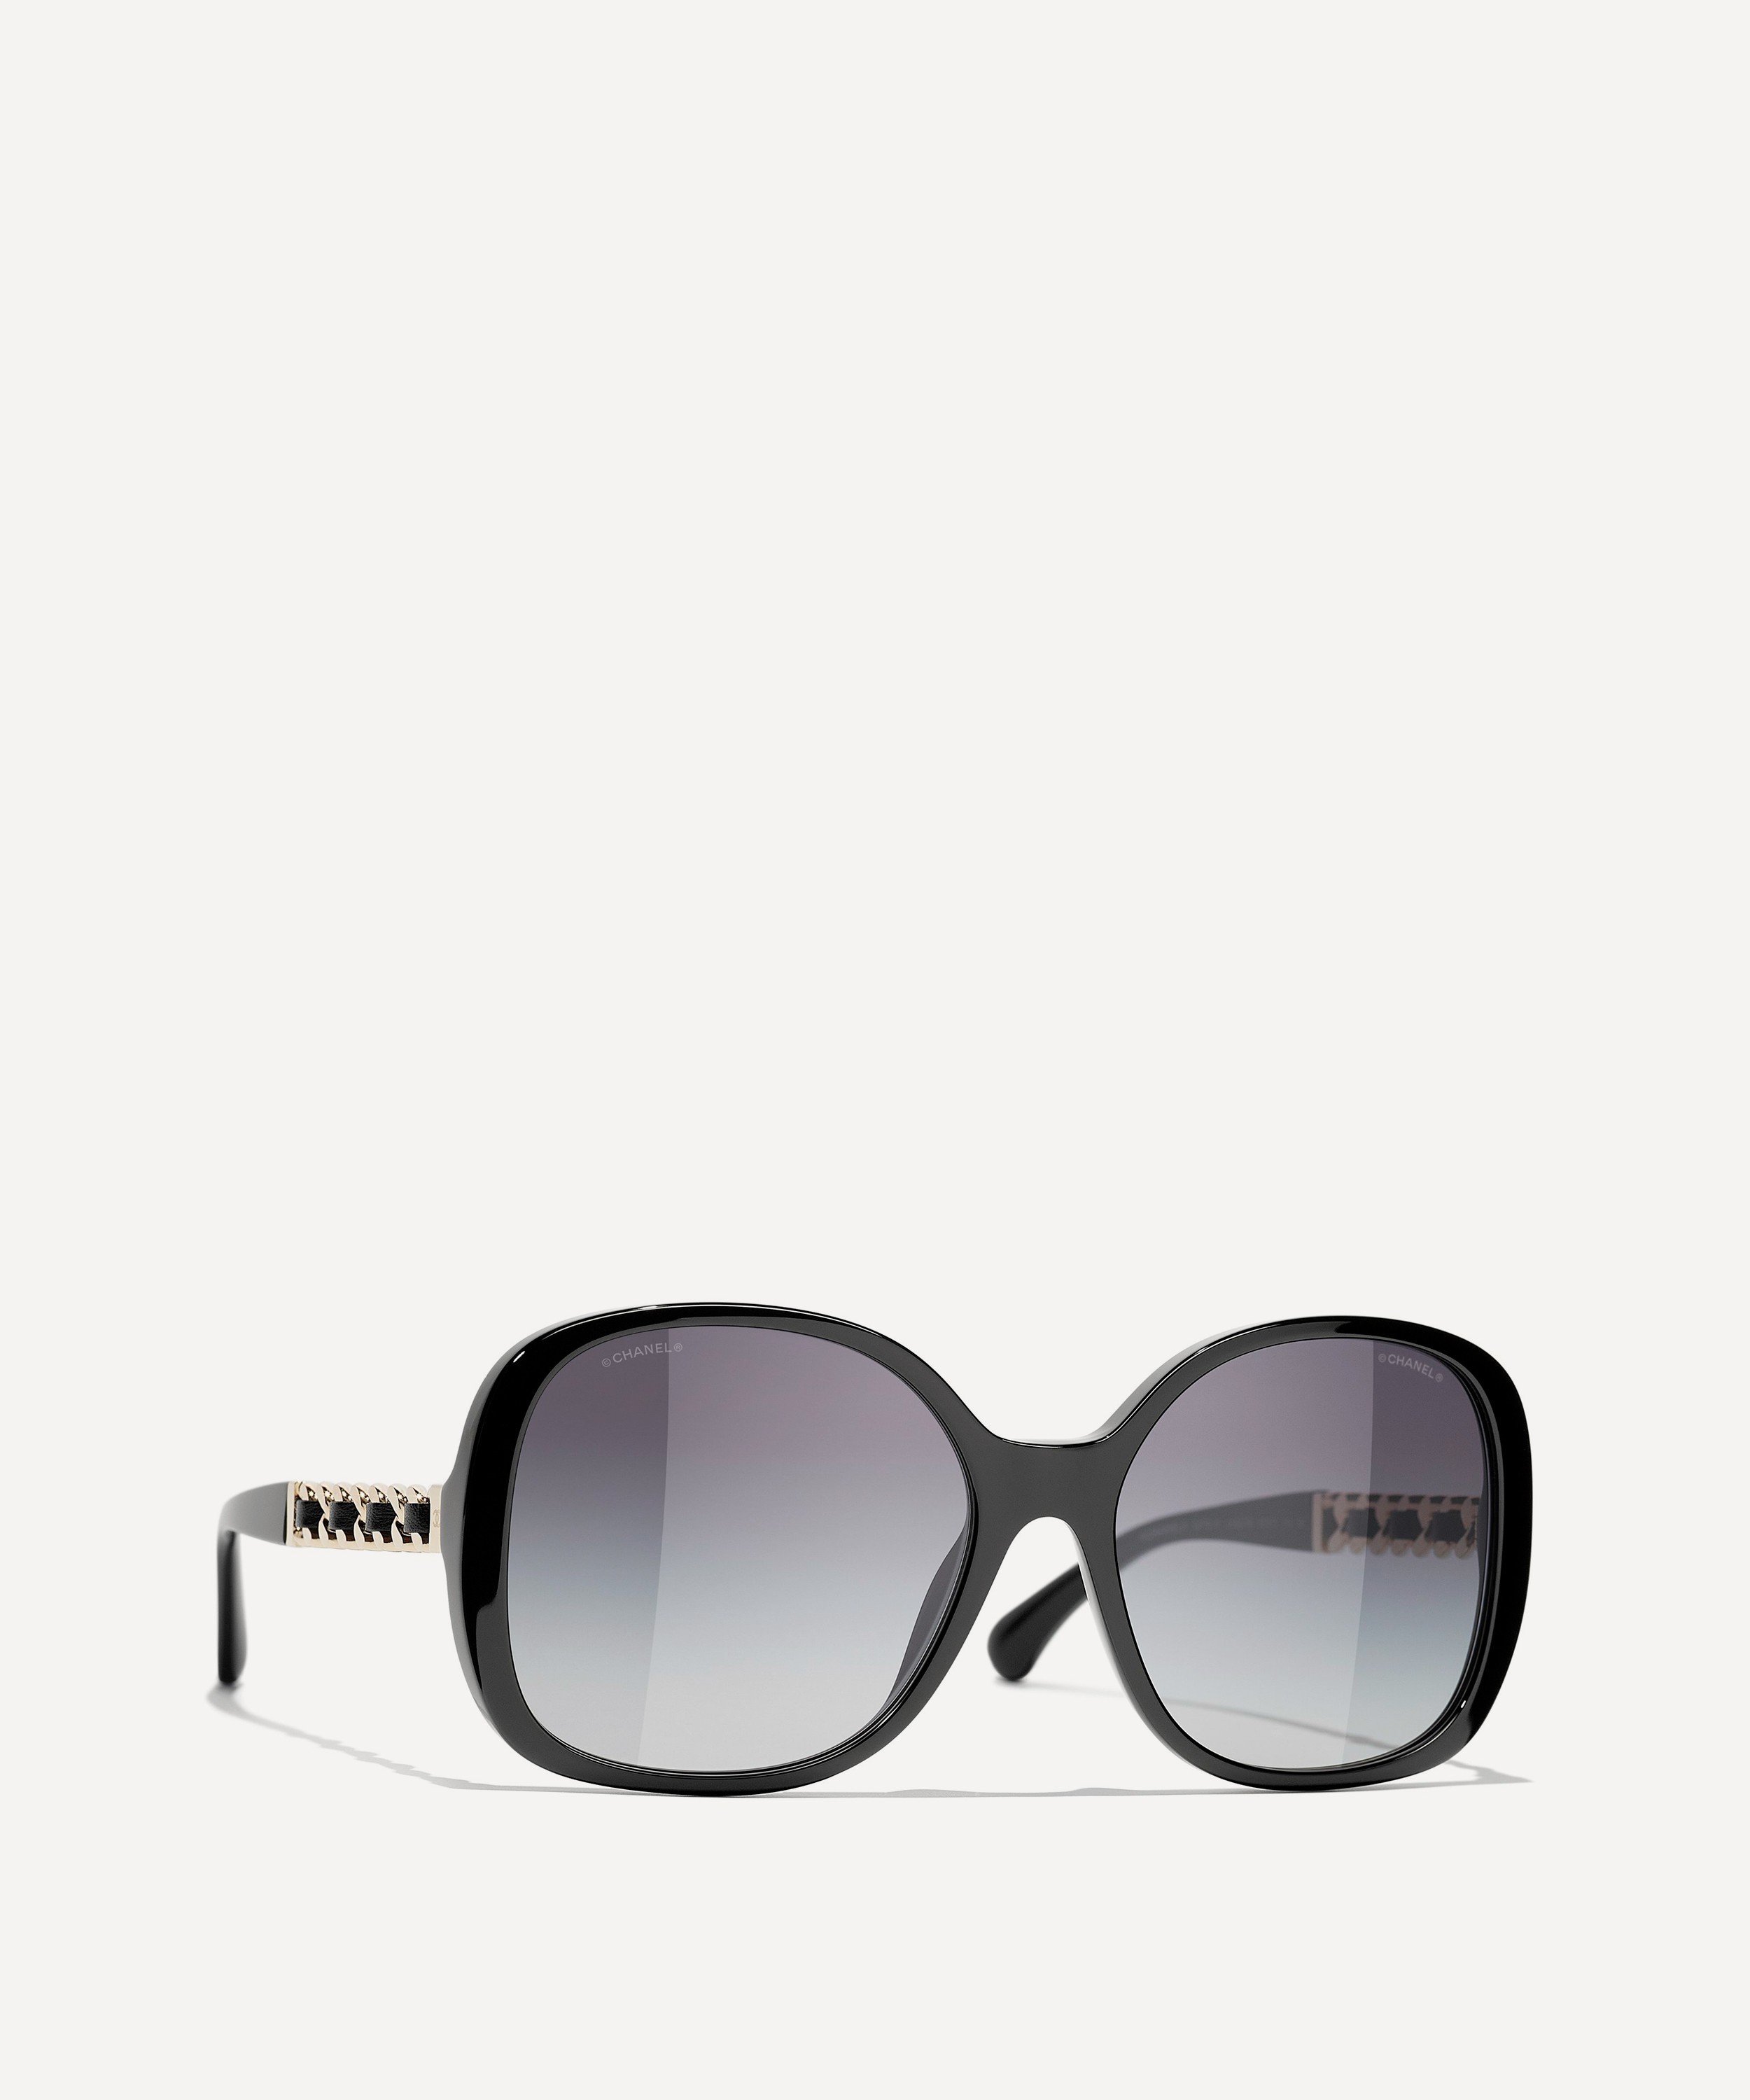 Chanel Women's Oversized Square Sunglasses